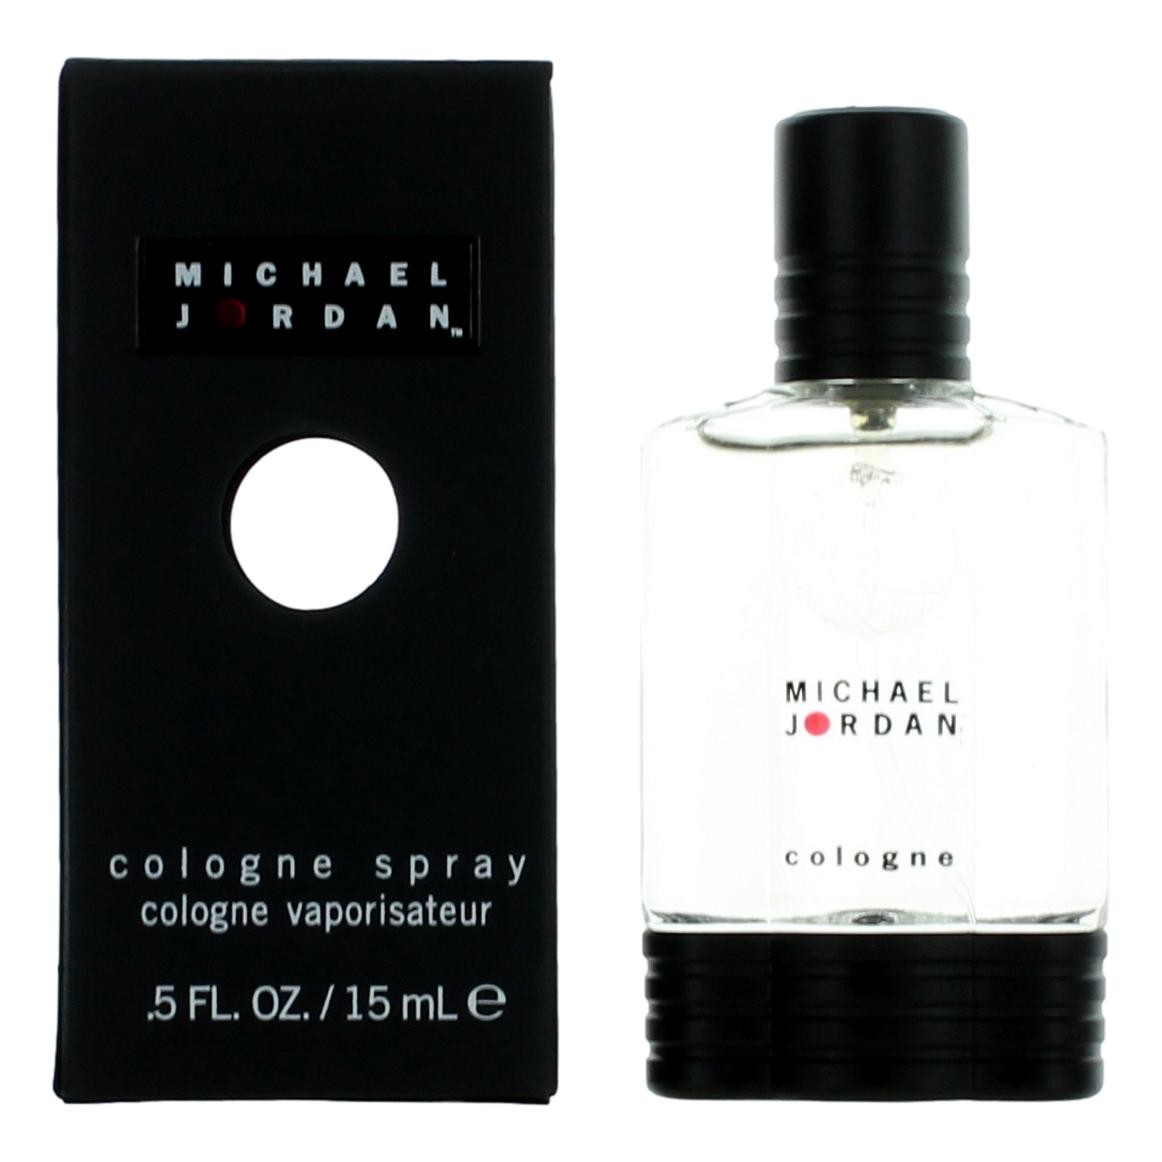 Michael Jordan by Michael Jordan 0.5 oz Cologne Spray for Men